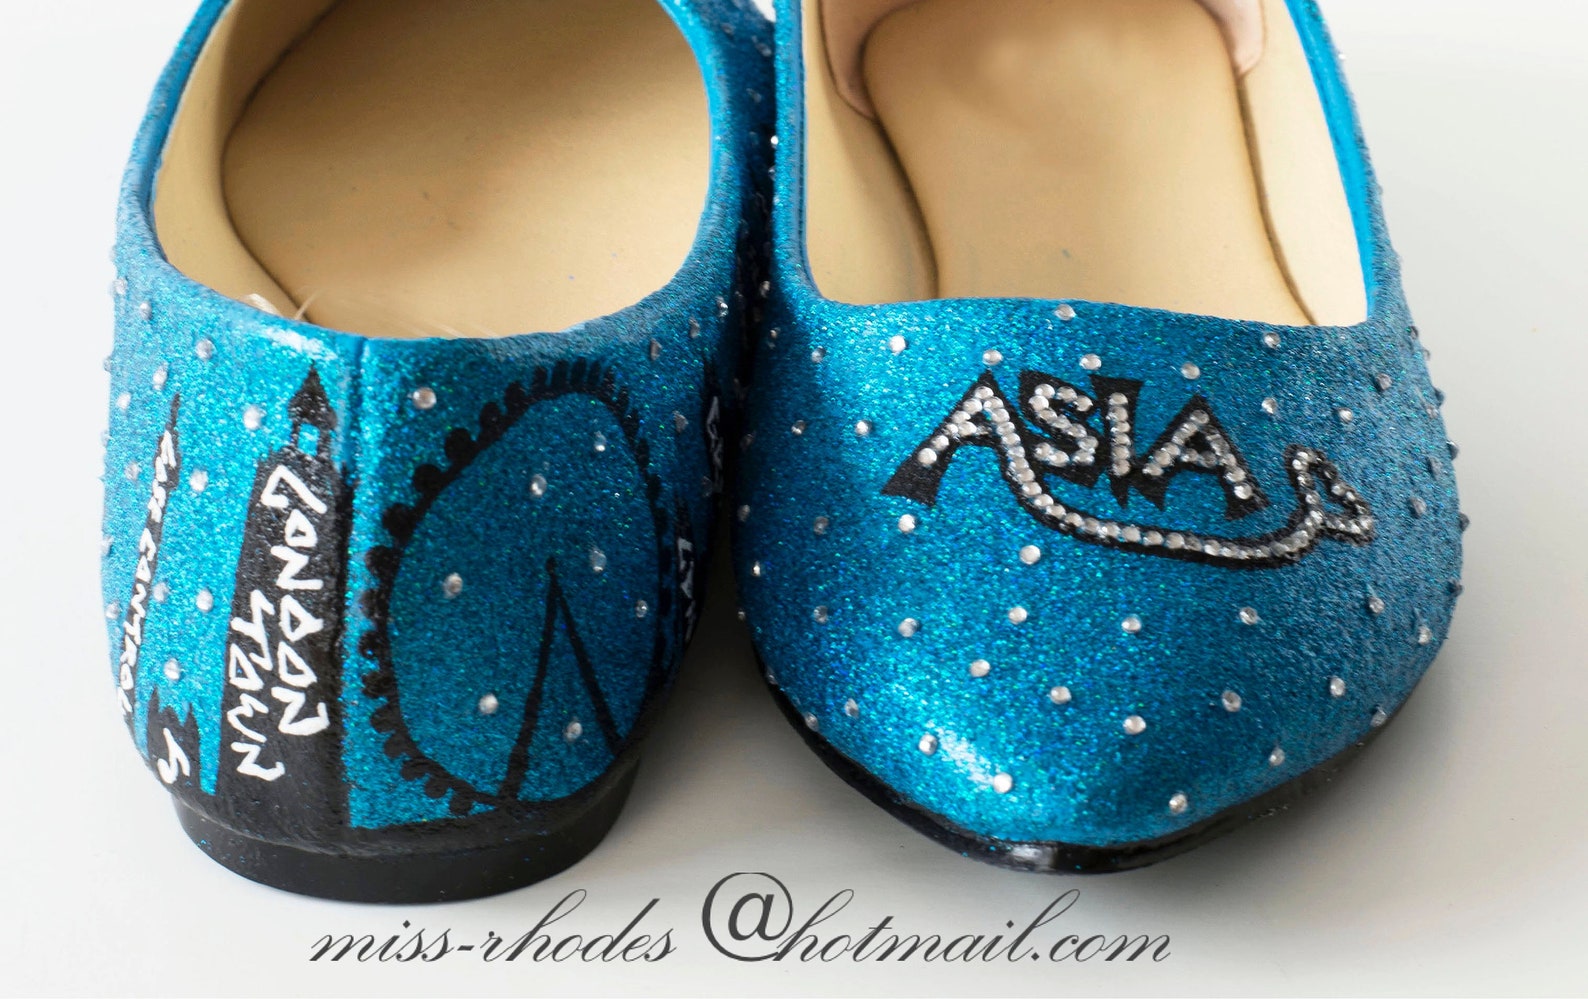 girls custom made hand painted bespoke birthday shoes ballet pumps blue glitter crystal stars london skyline graffiti london tow